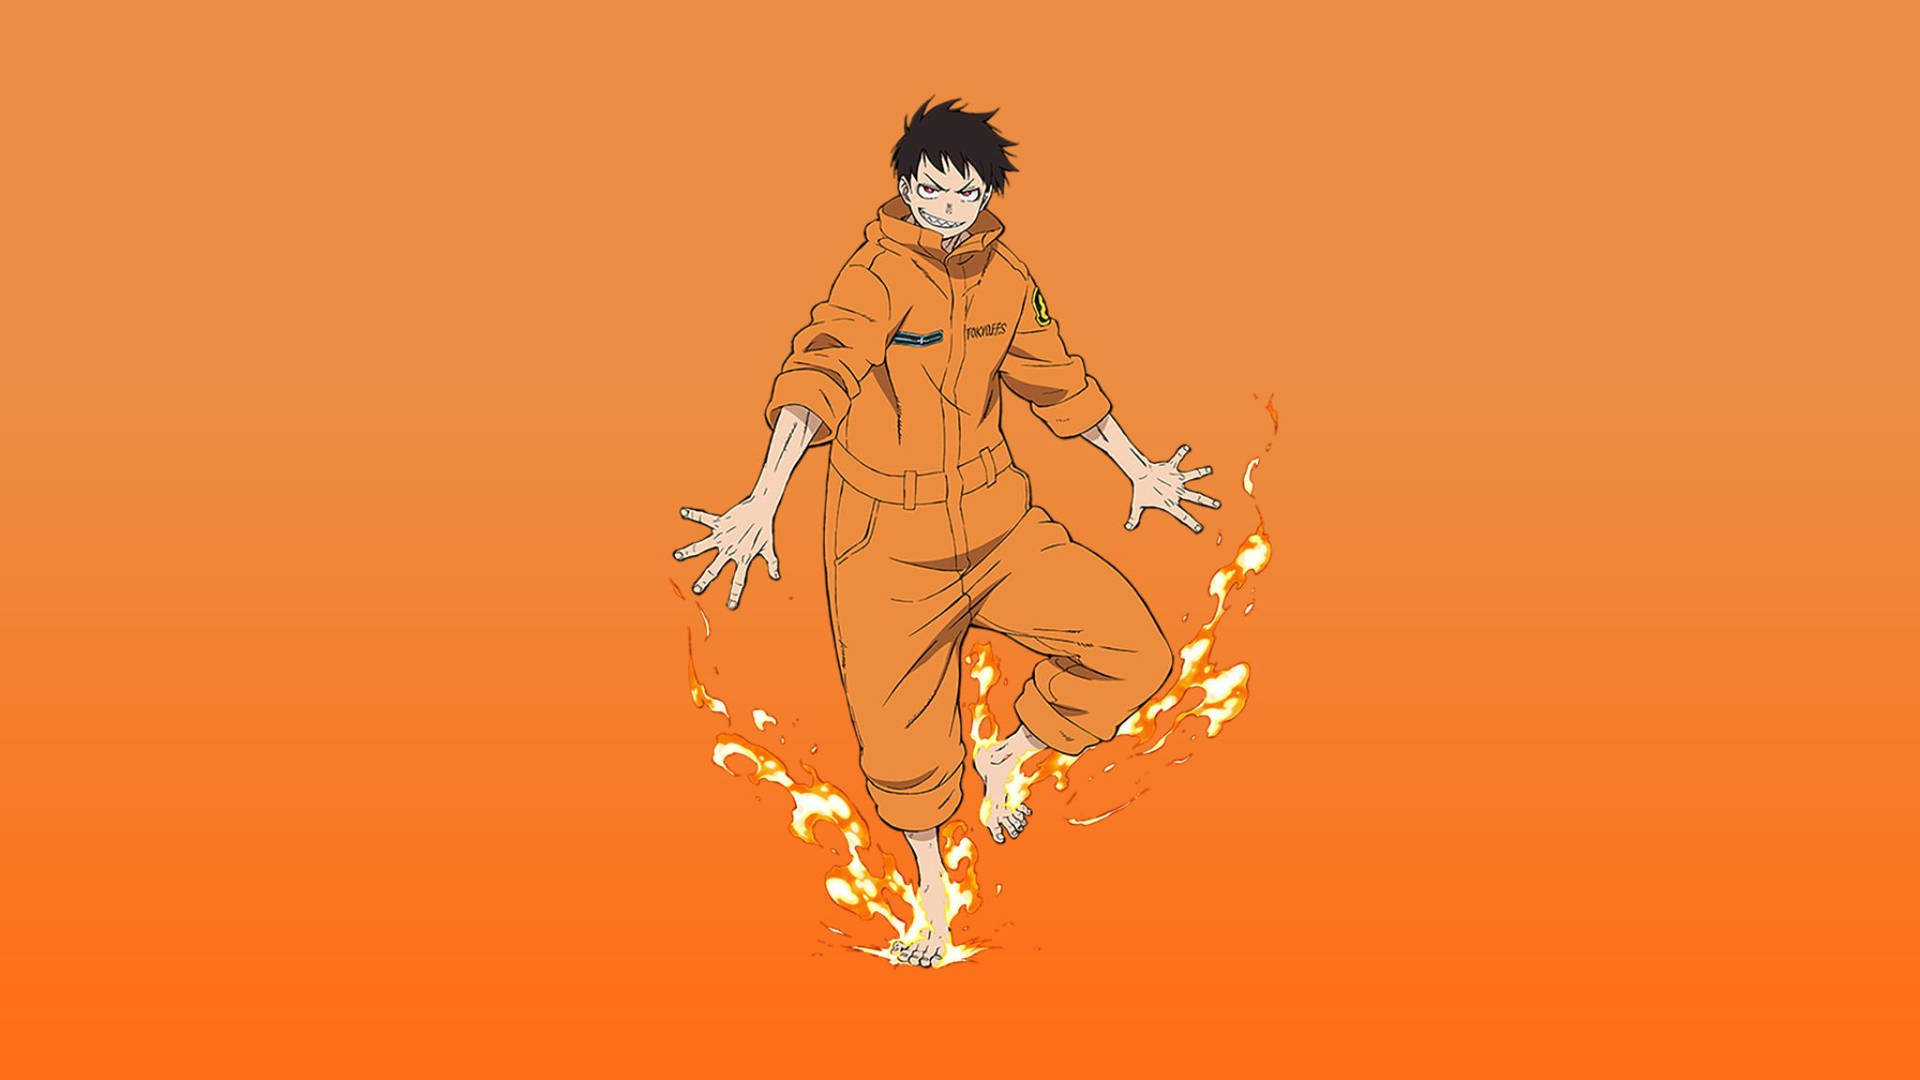 Minimalistischesshinra Fire Anime Wallpaper